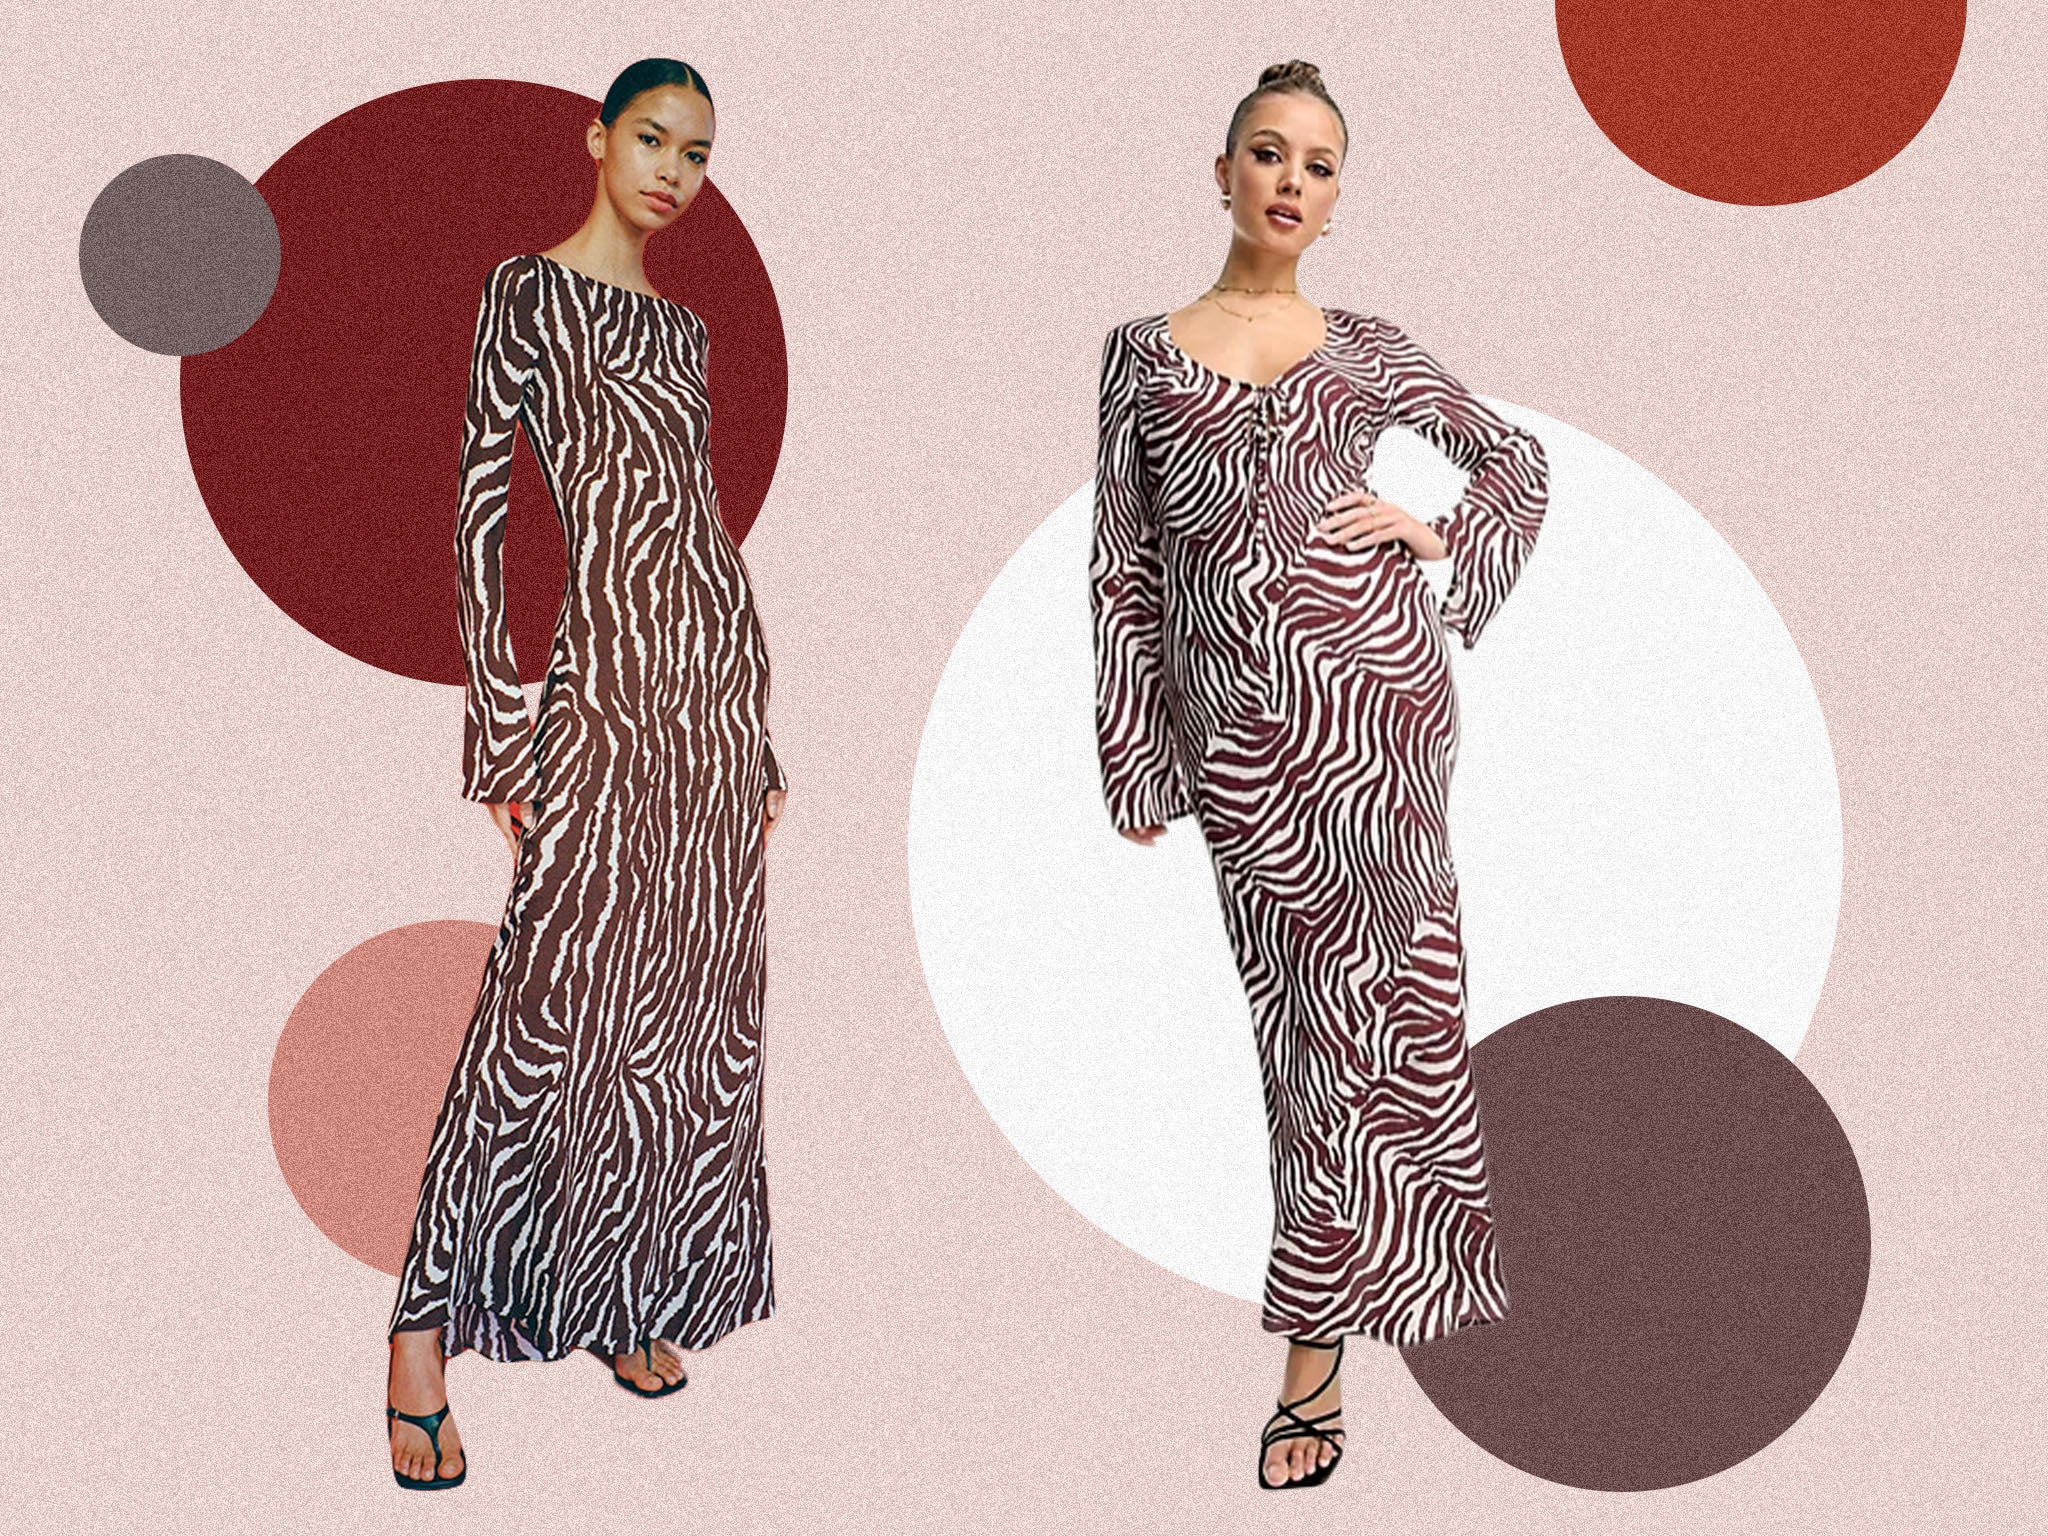 The zebra-print finish oozes Seventies glamour